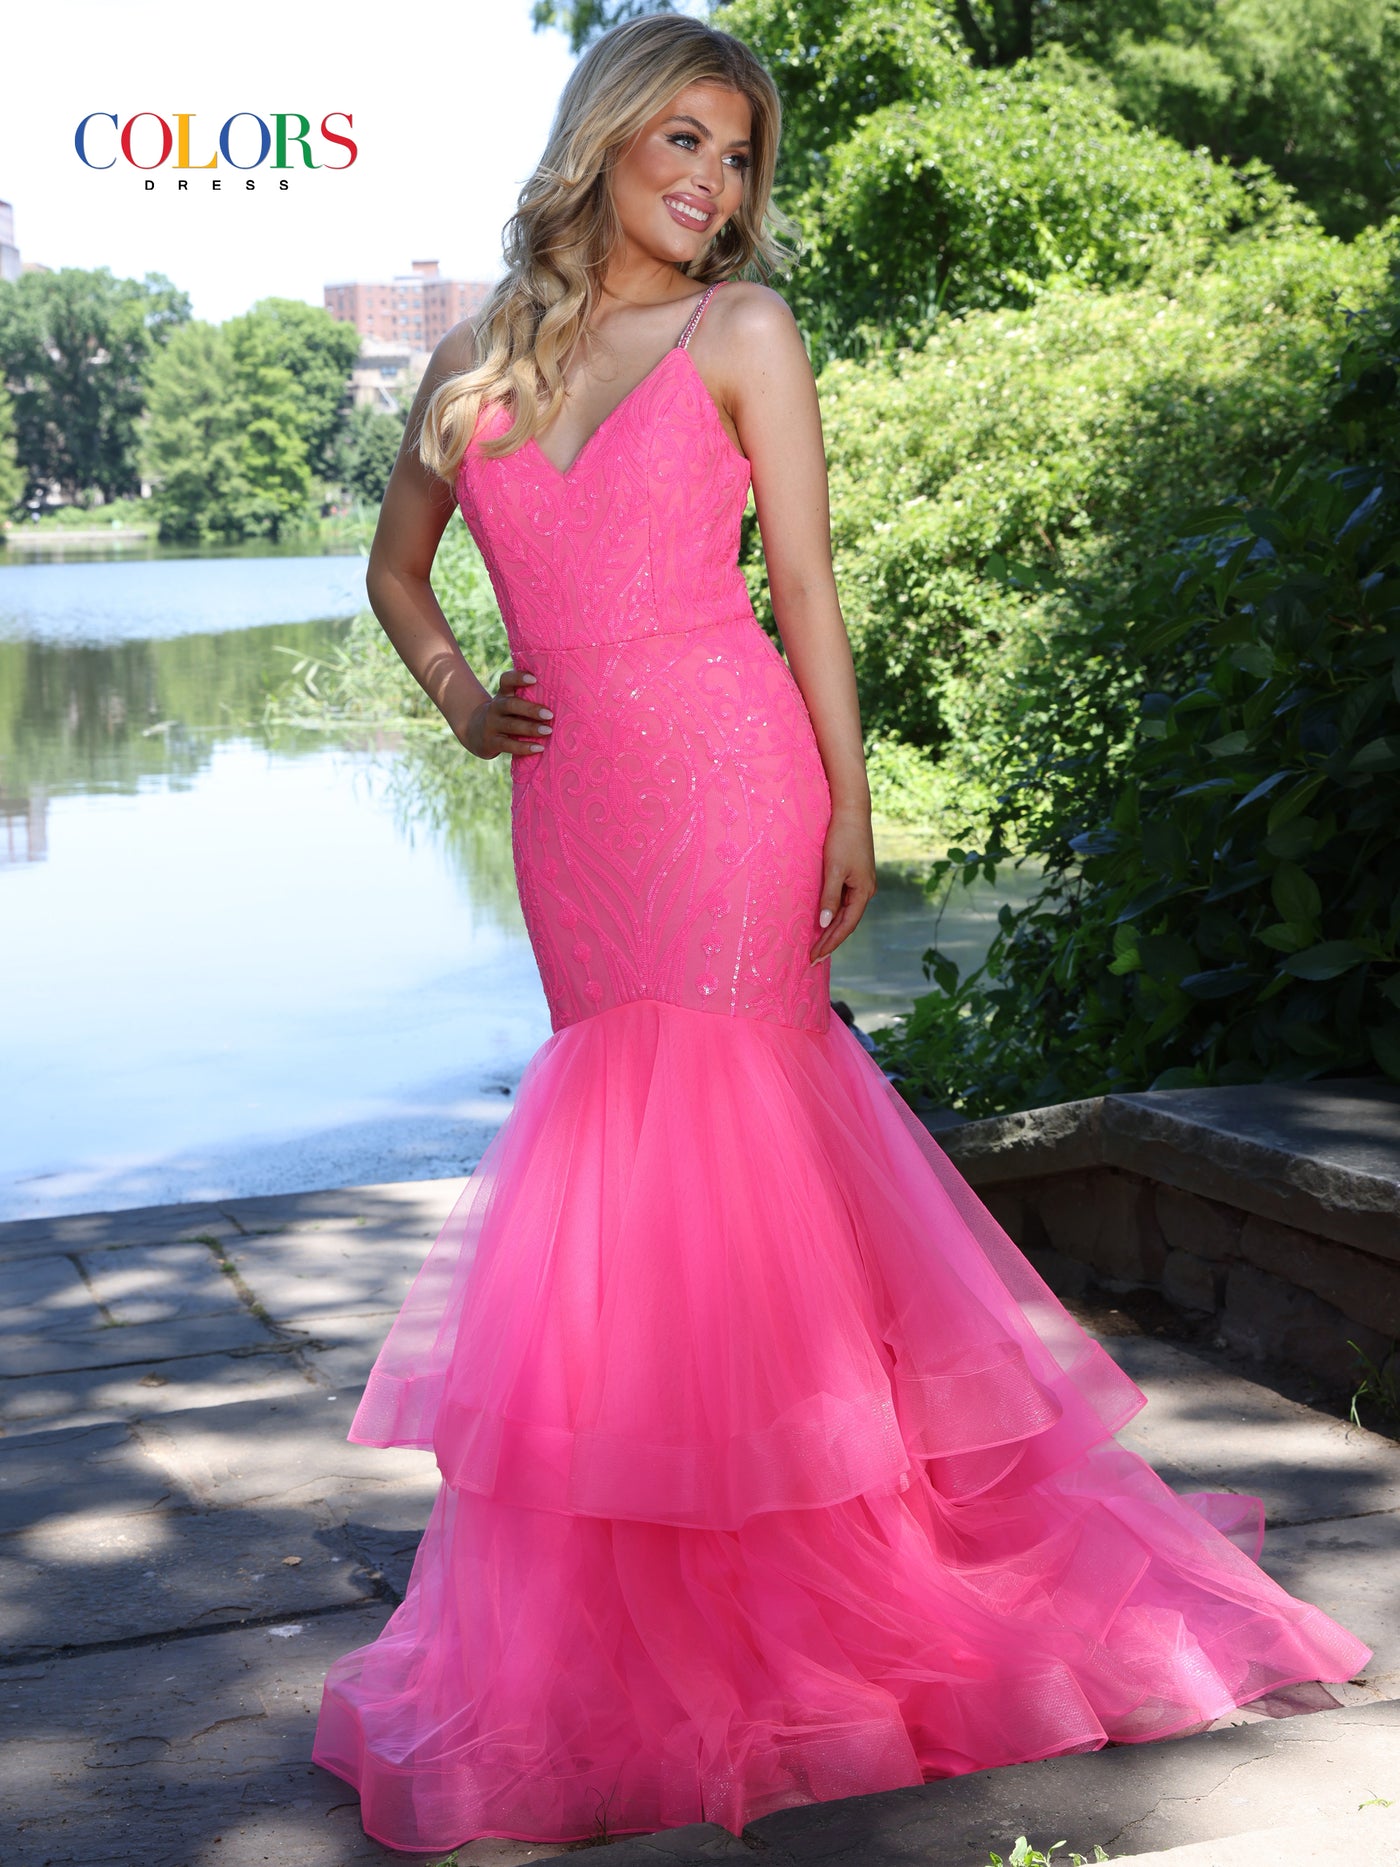 Colors Dress 2978 Hot Pink Prom Dress